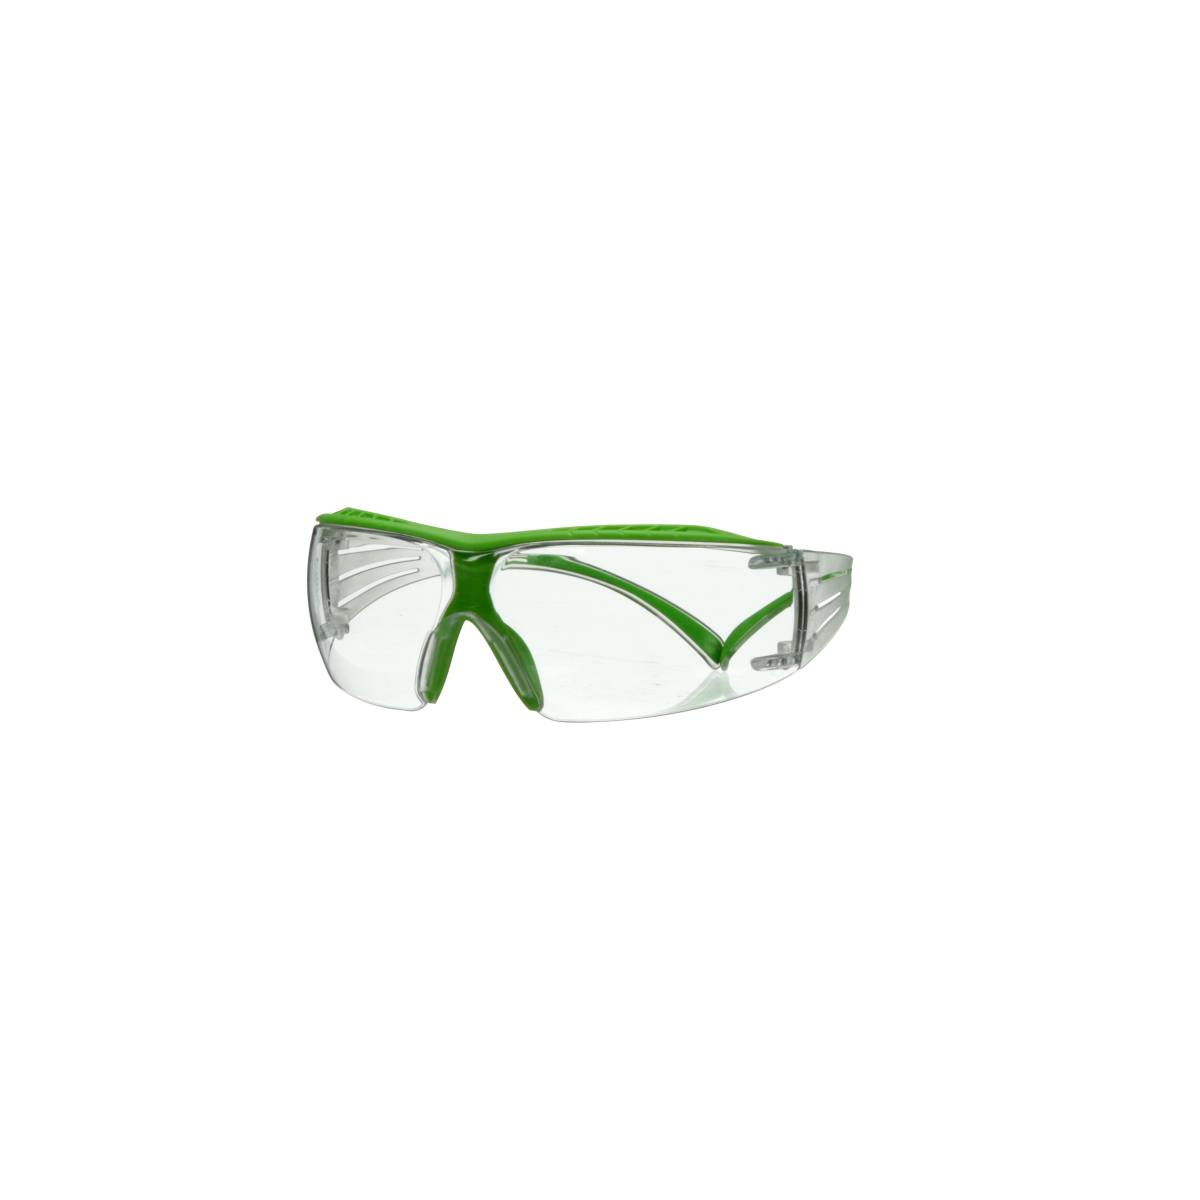 occhiali di sicurezza 3M SecureFit 400X, montatura verde-trasparente, rivestimento antiappannamento Scotchgard (K/N), lenti chiare, SF401XSGAF-GRN